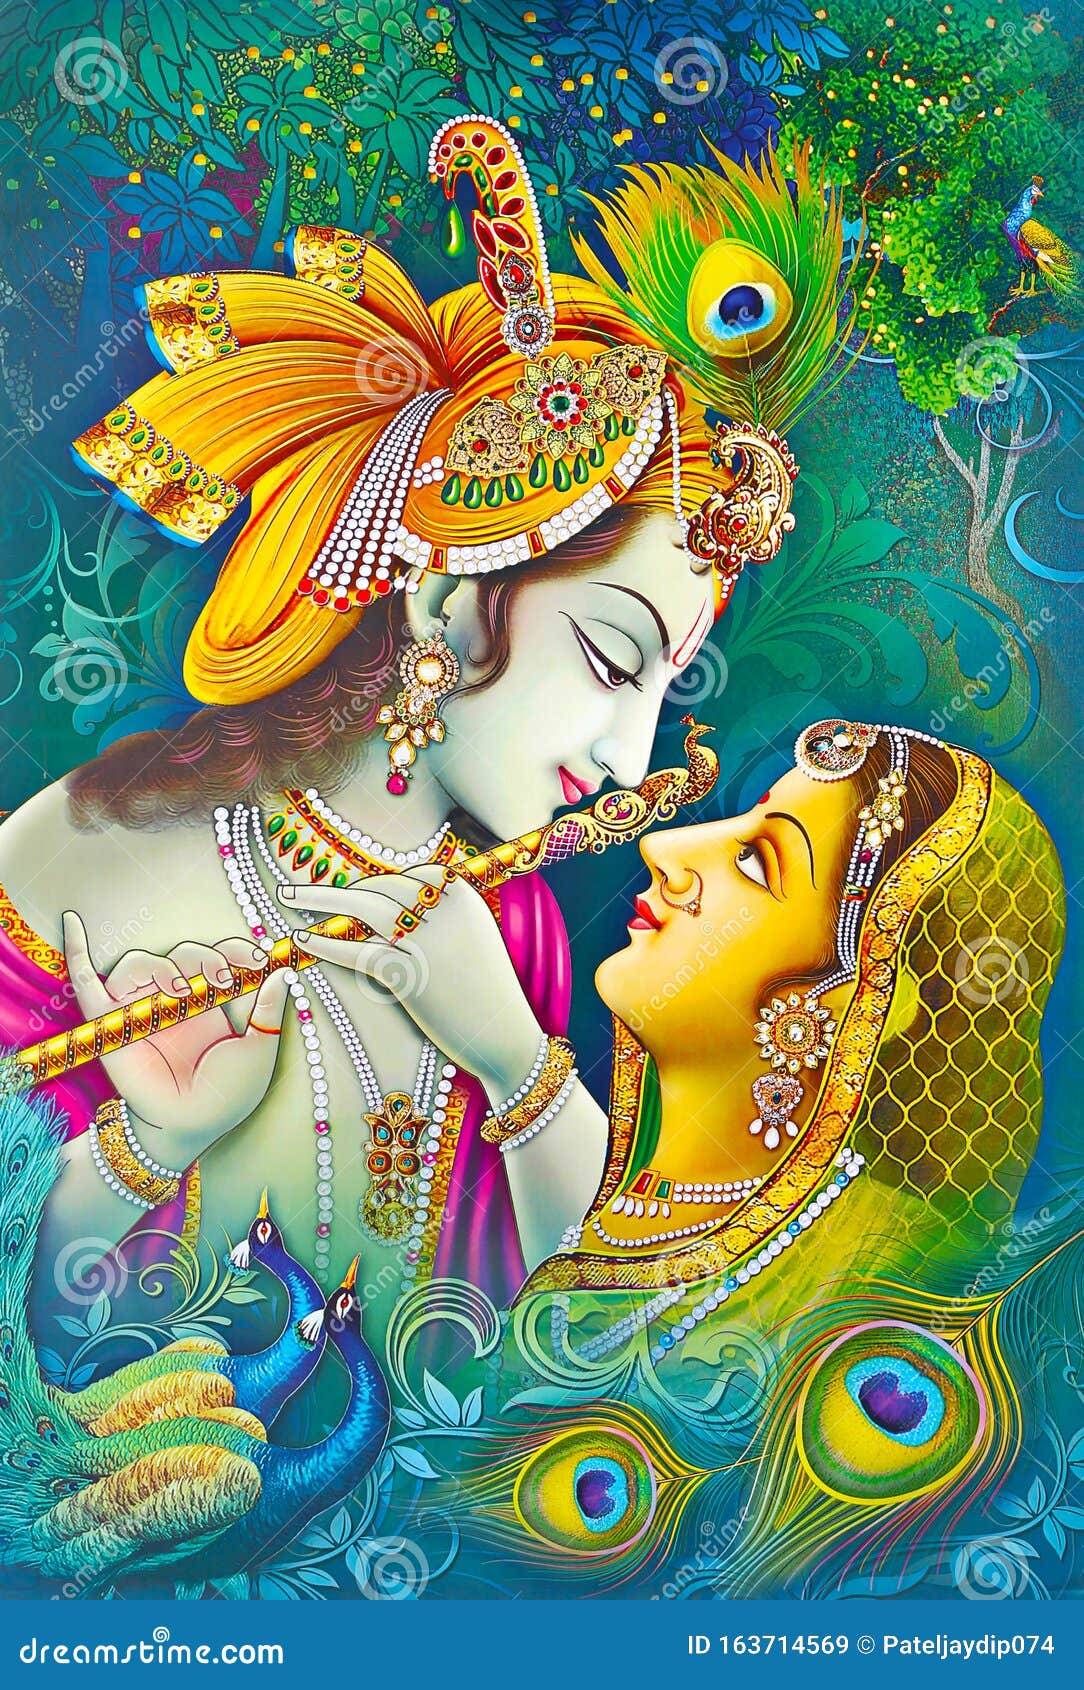 2655 Lord Krishna Wallpaper Images Stock Photos  Vectors  Shutterstock